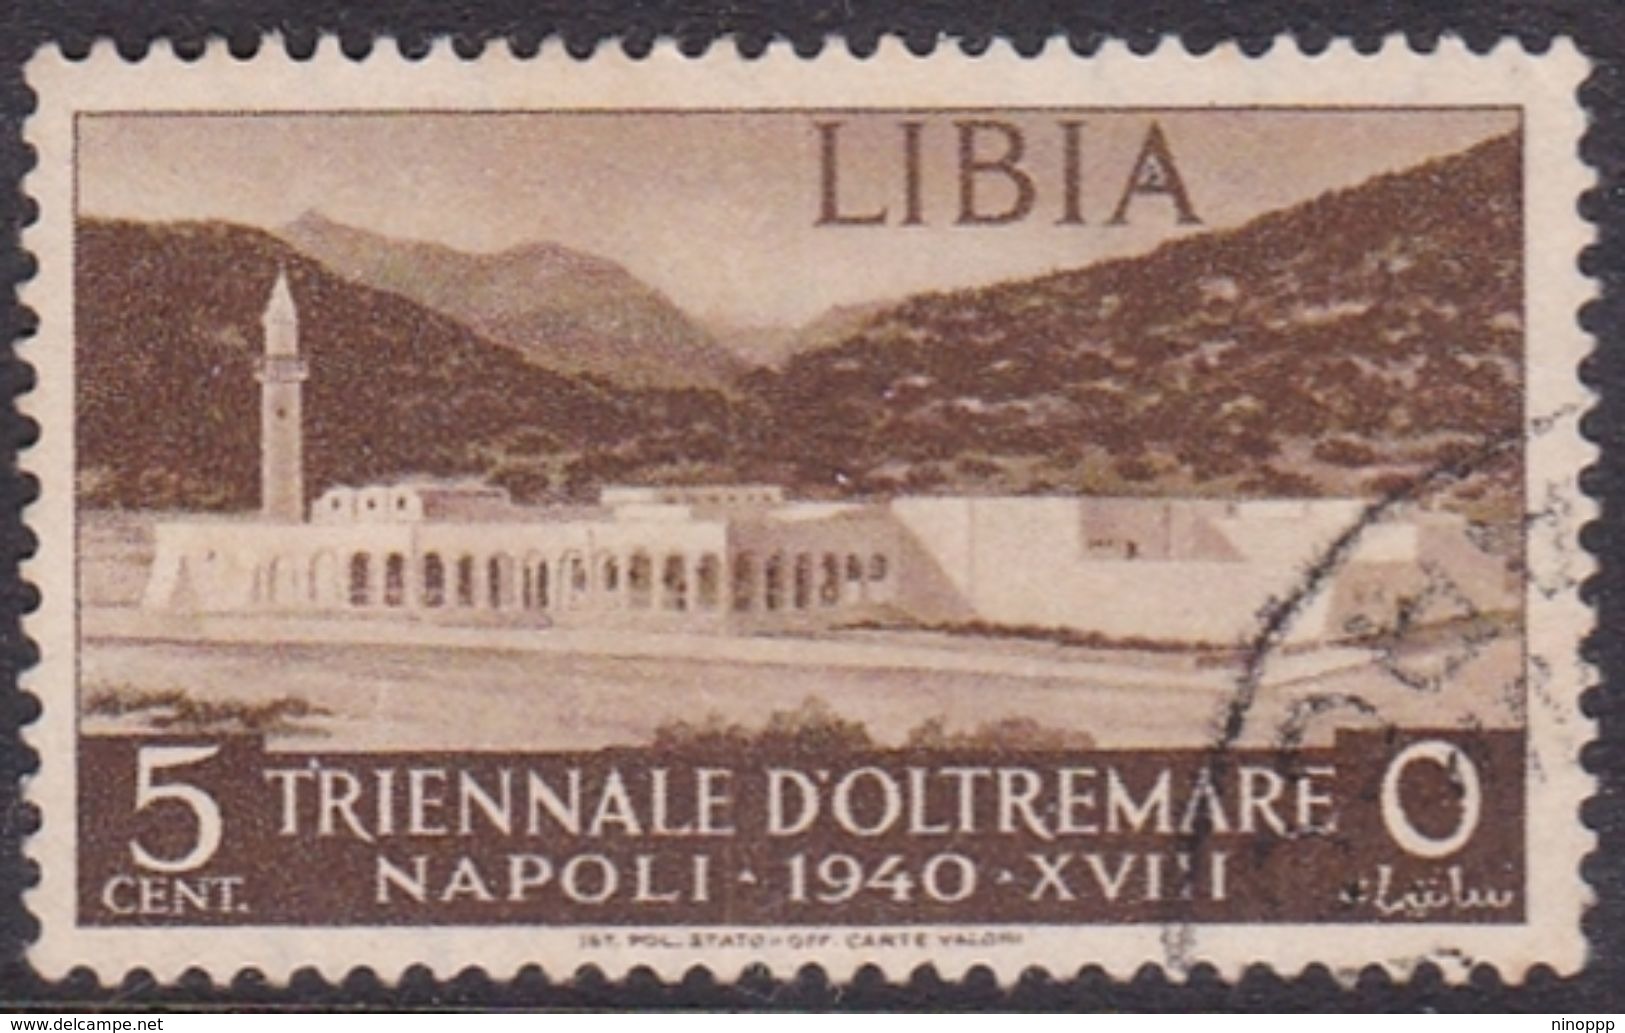 Italy-Colonies And Territories-Libya S 164 1940 Triennial Overseas Exposition,5c Brown,used - Libya